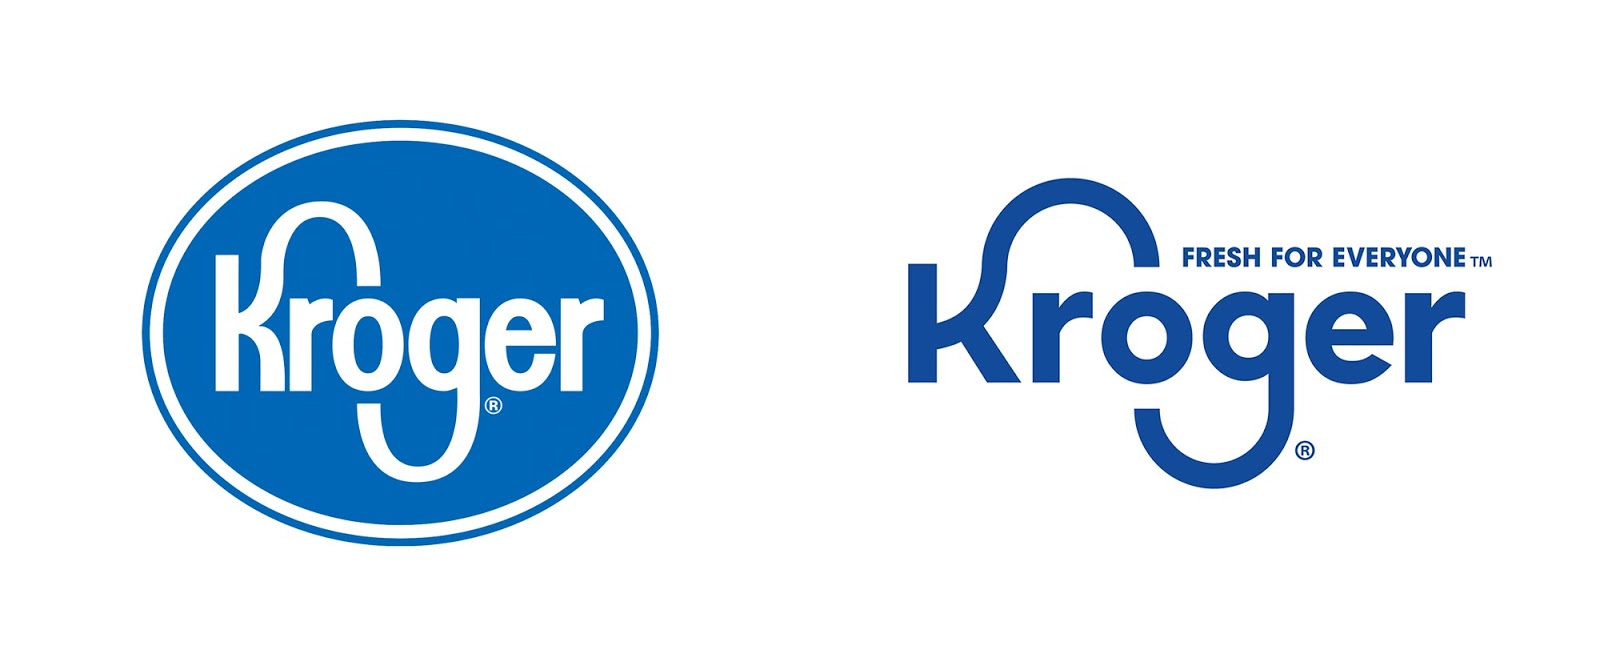 Kroger Redesigned Logo and Introduced Slogan